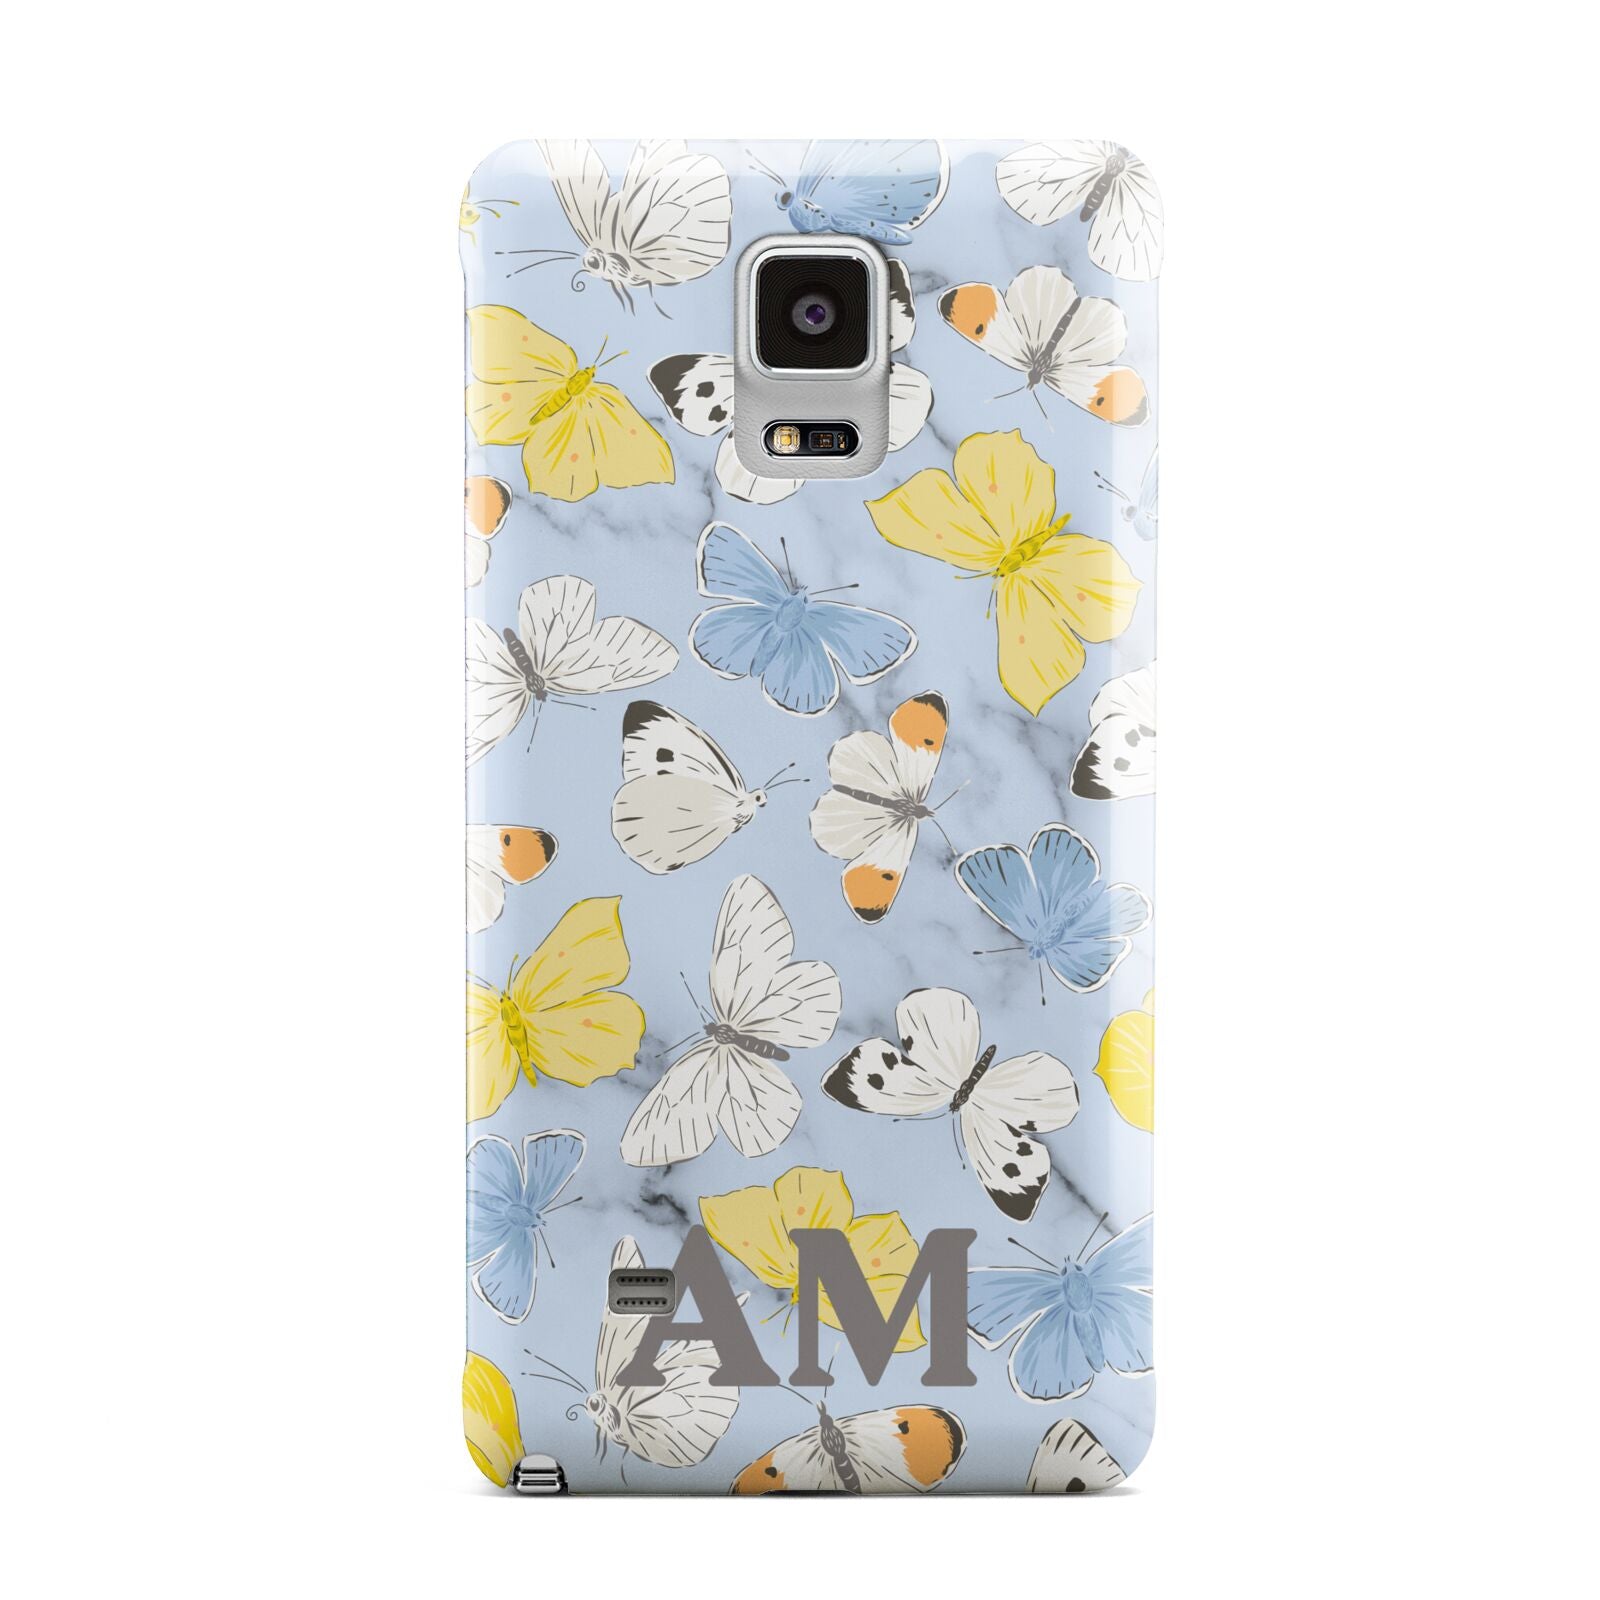 Custom Butterfly Samsung Galaxy Note 4 Case